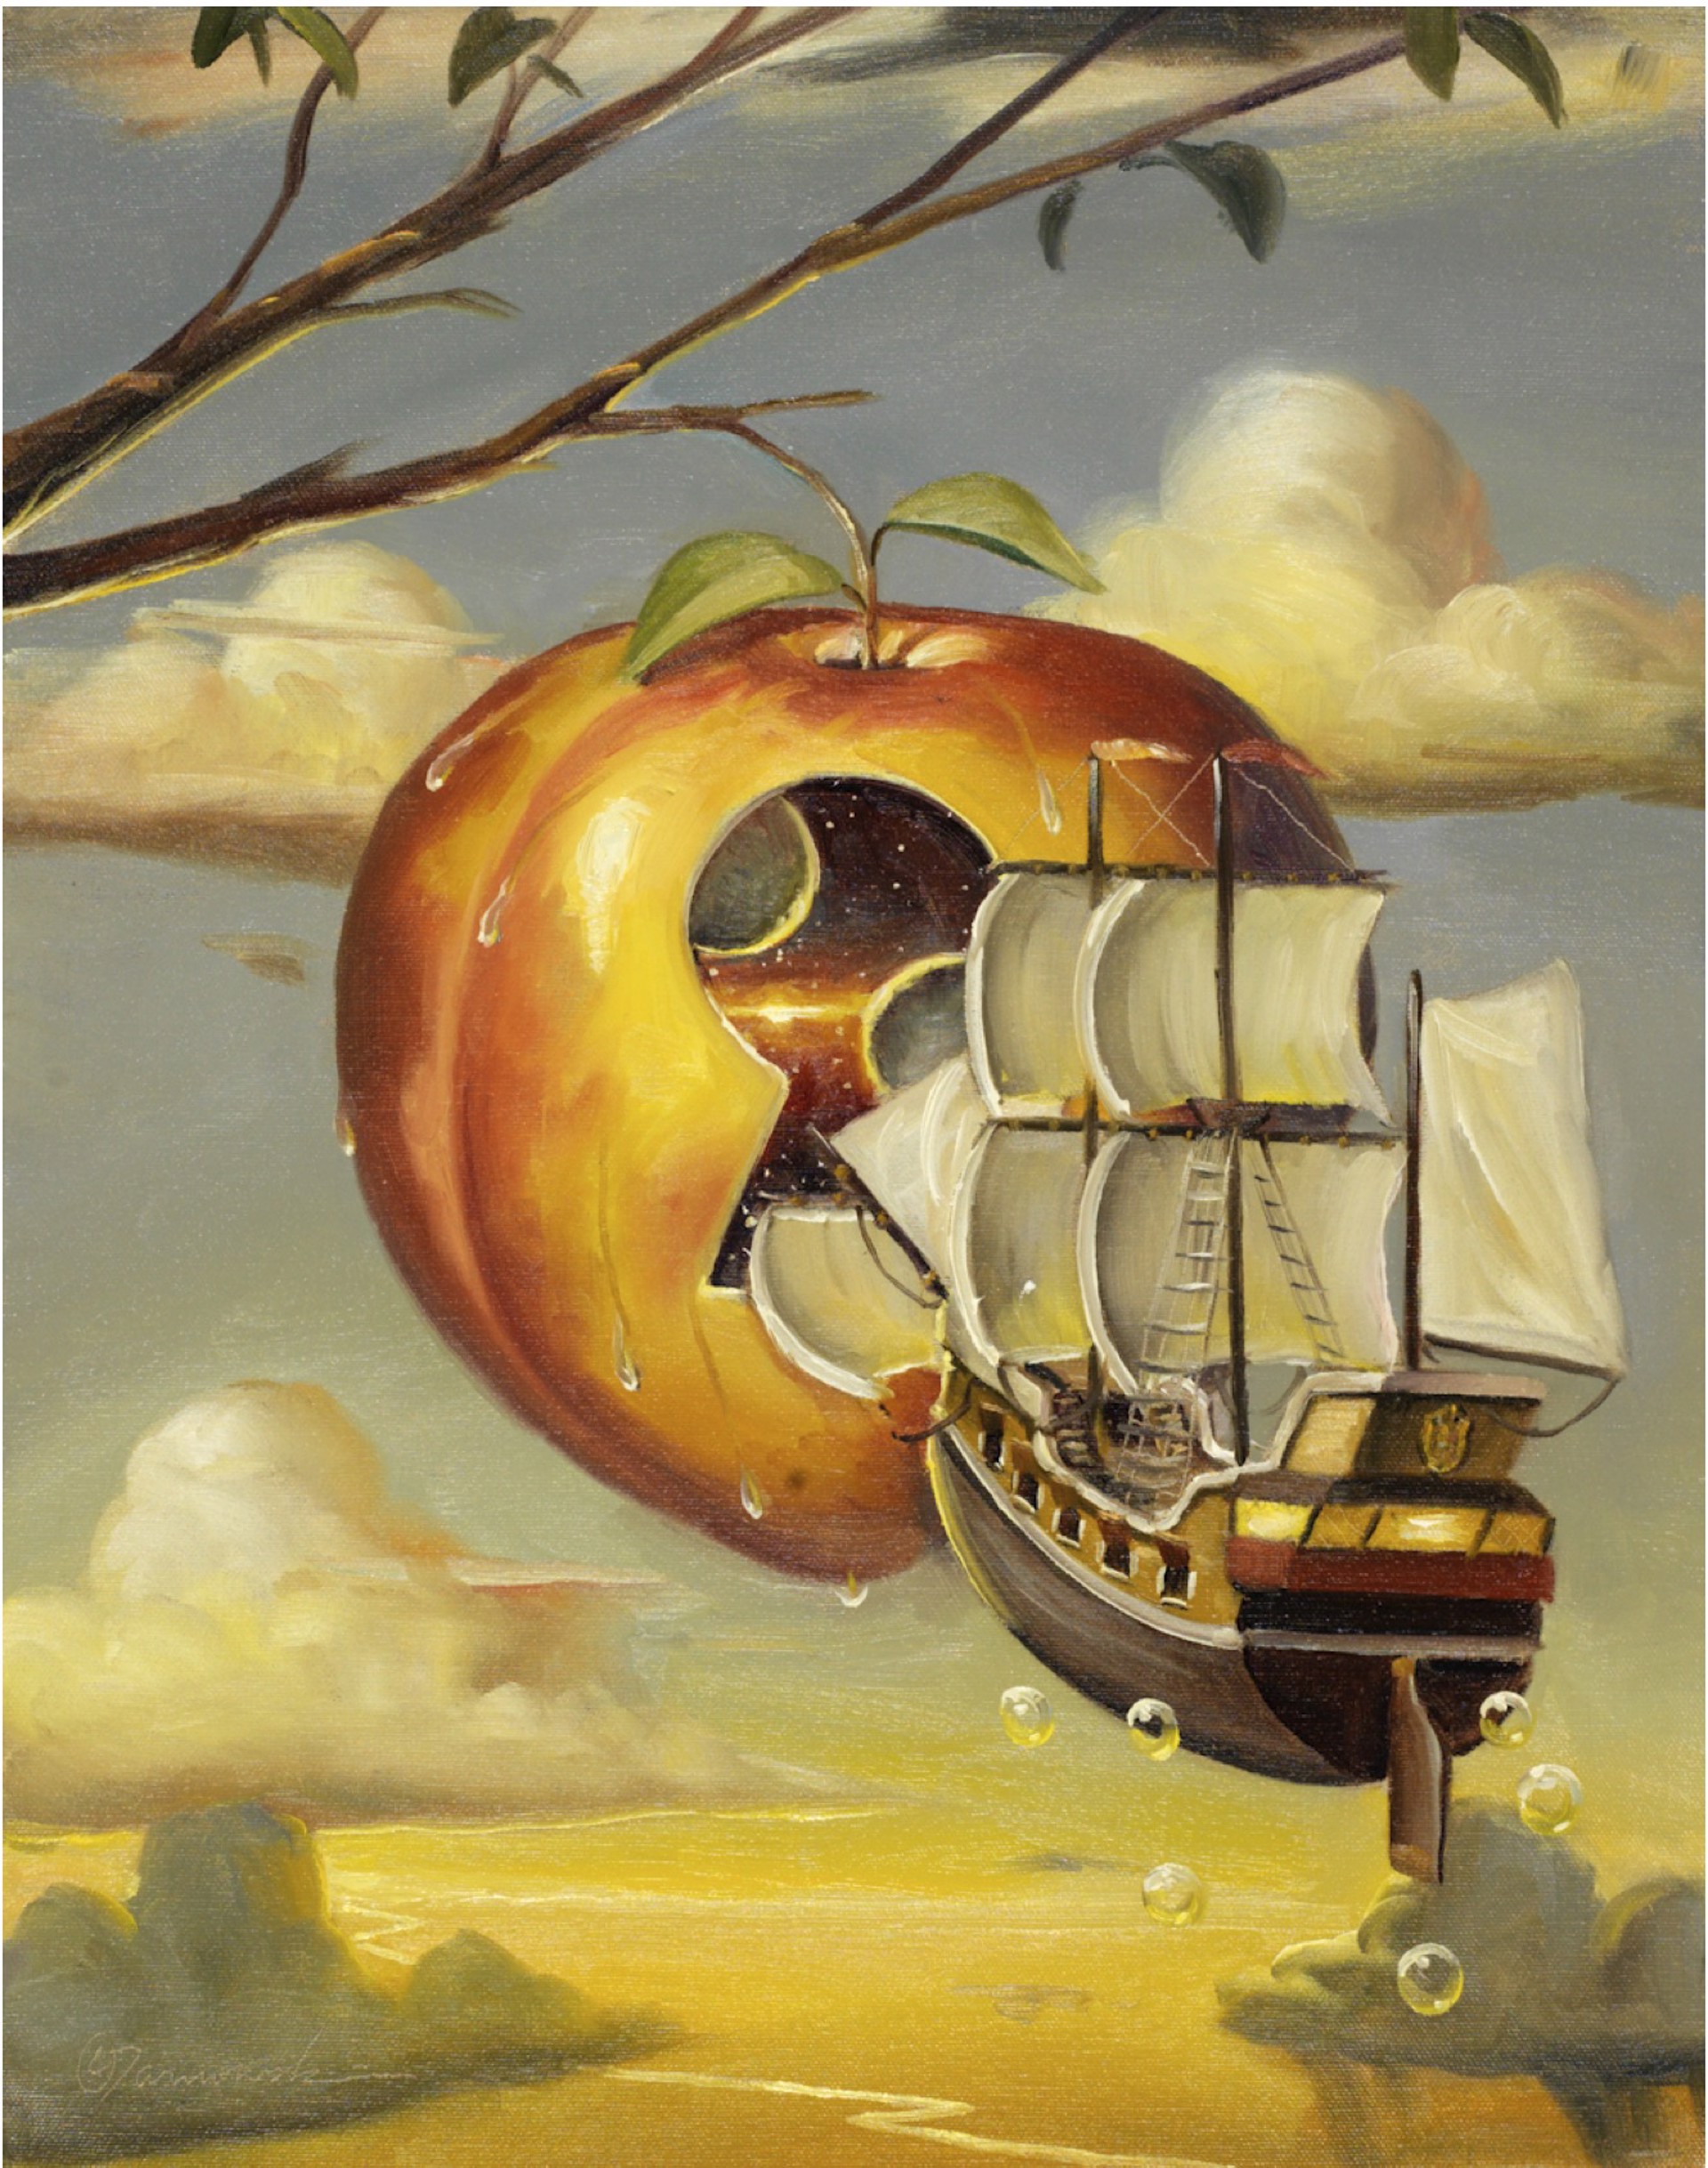 A Peach With A View by Glen Tarnowski